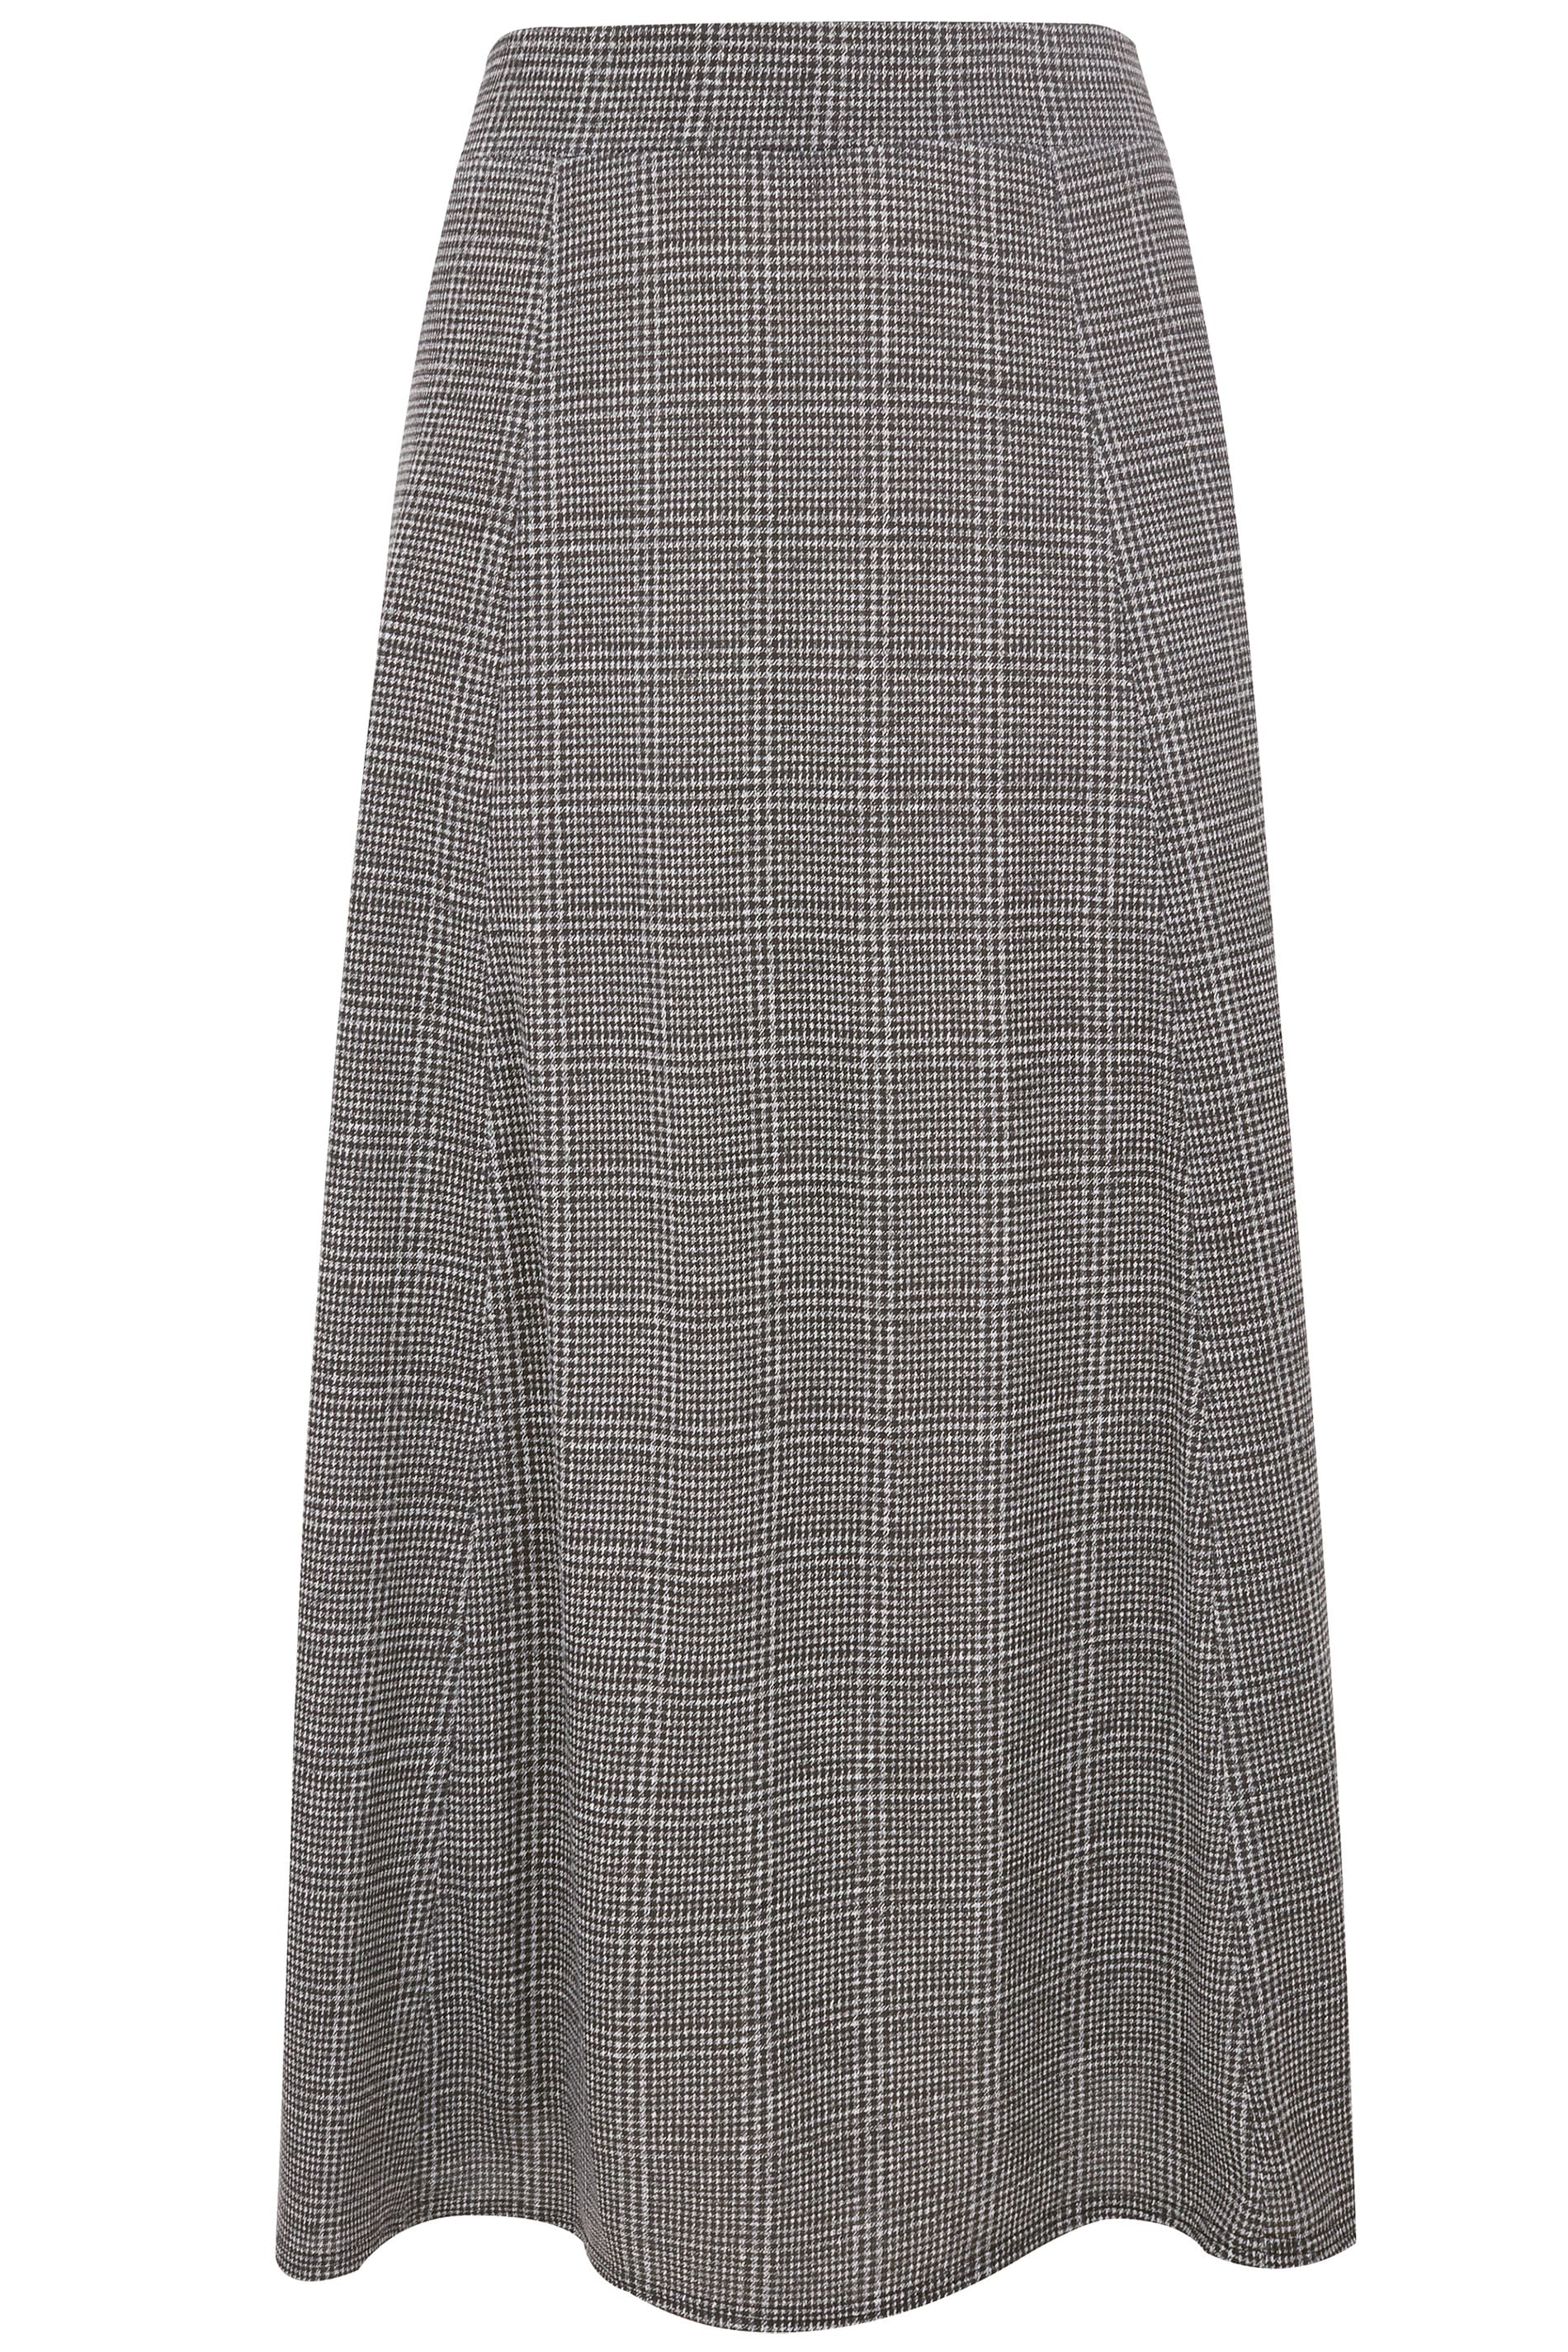 Grey Checked Maxi Skirt, plus size 16 to 36